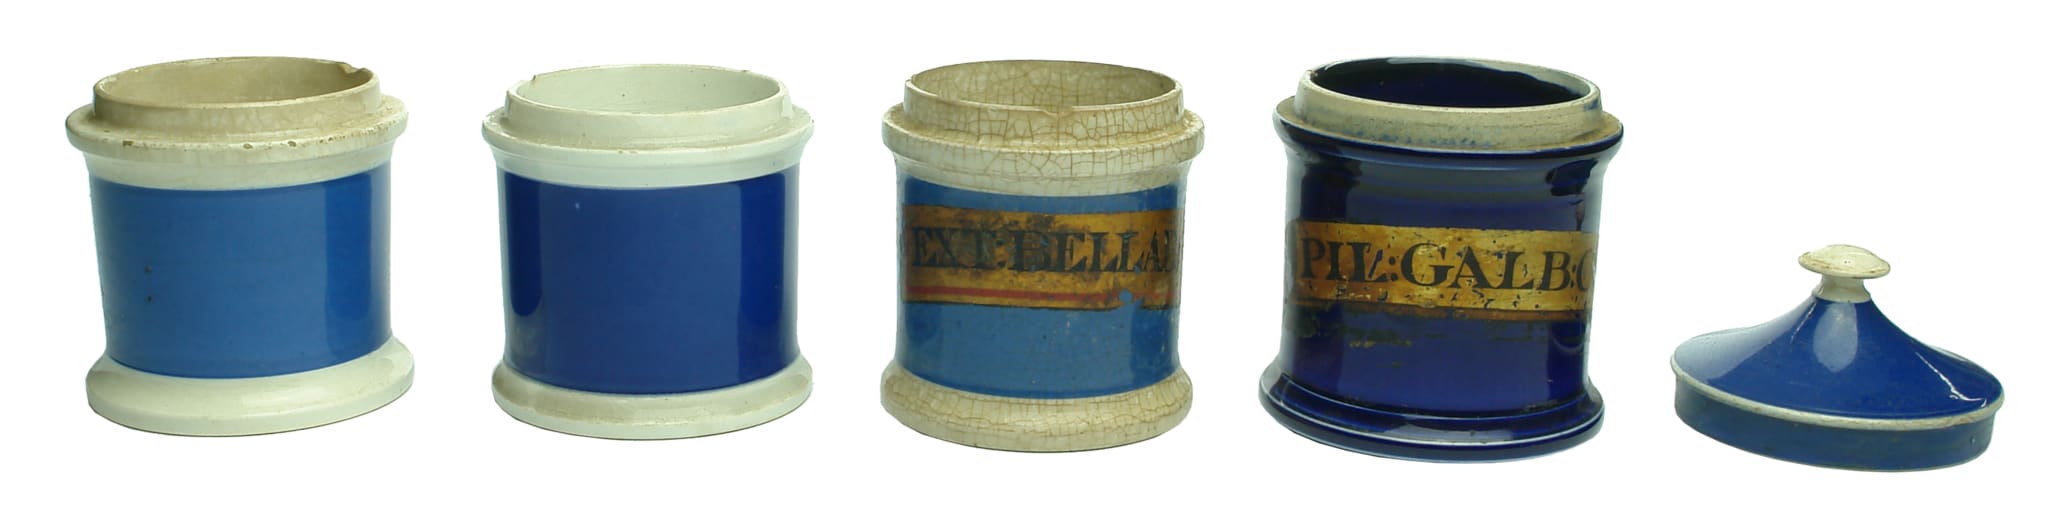 Antique Pharmay Jars